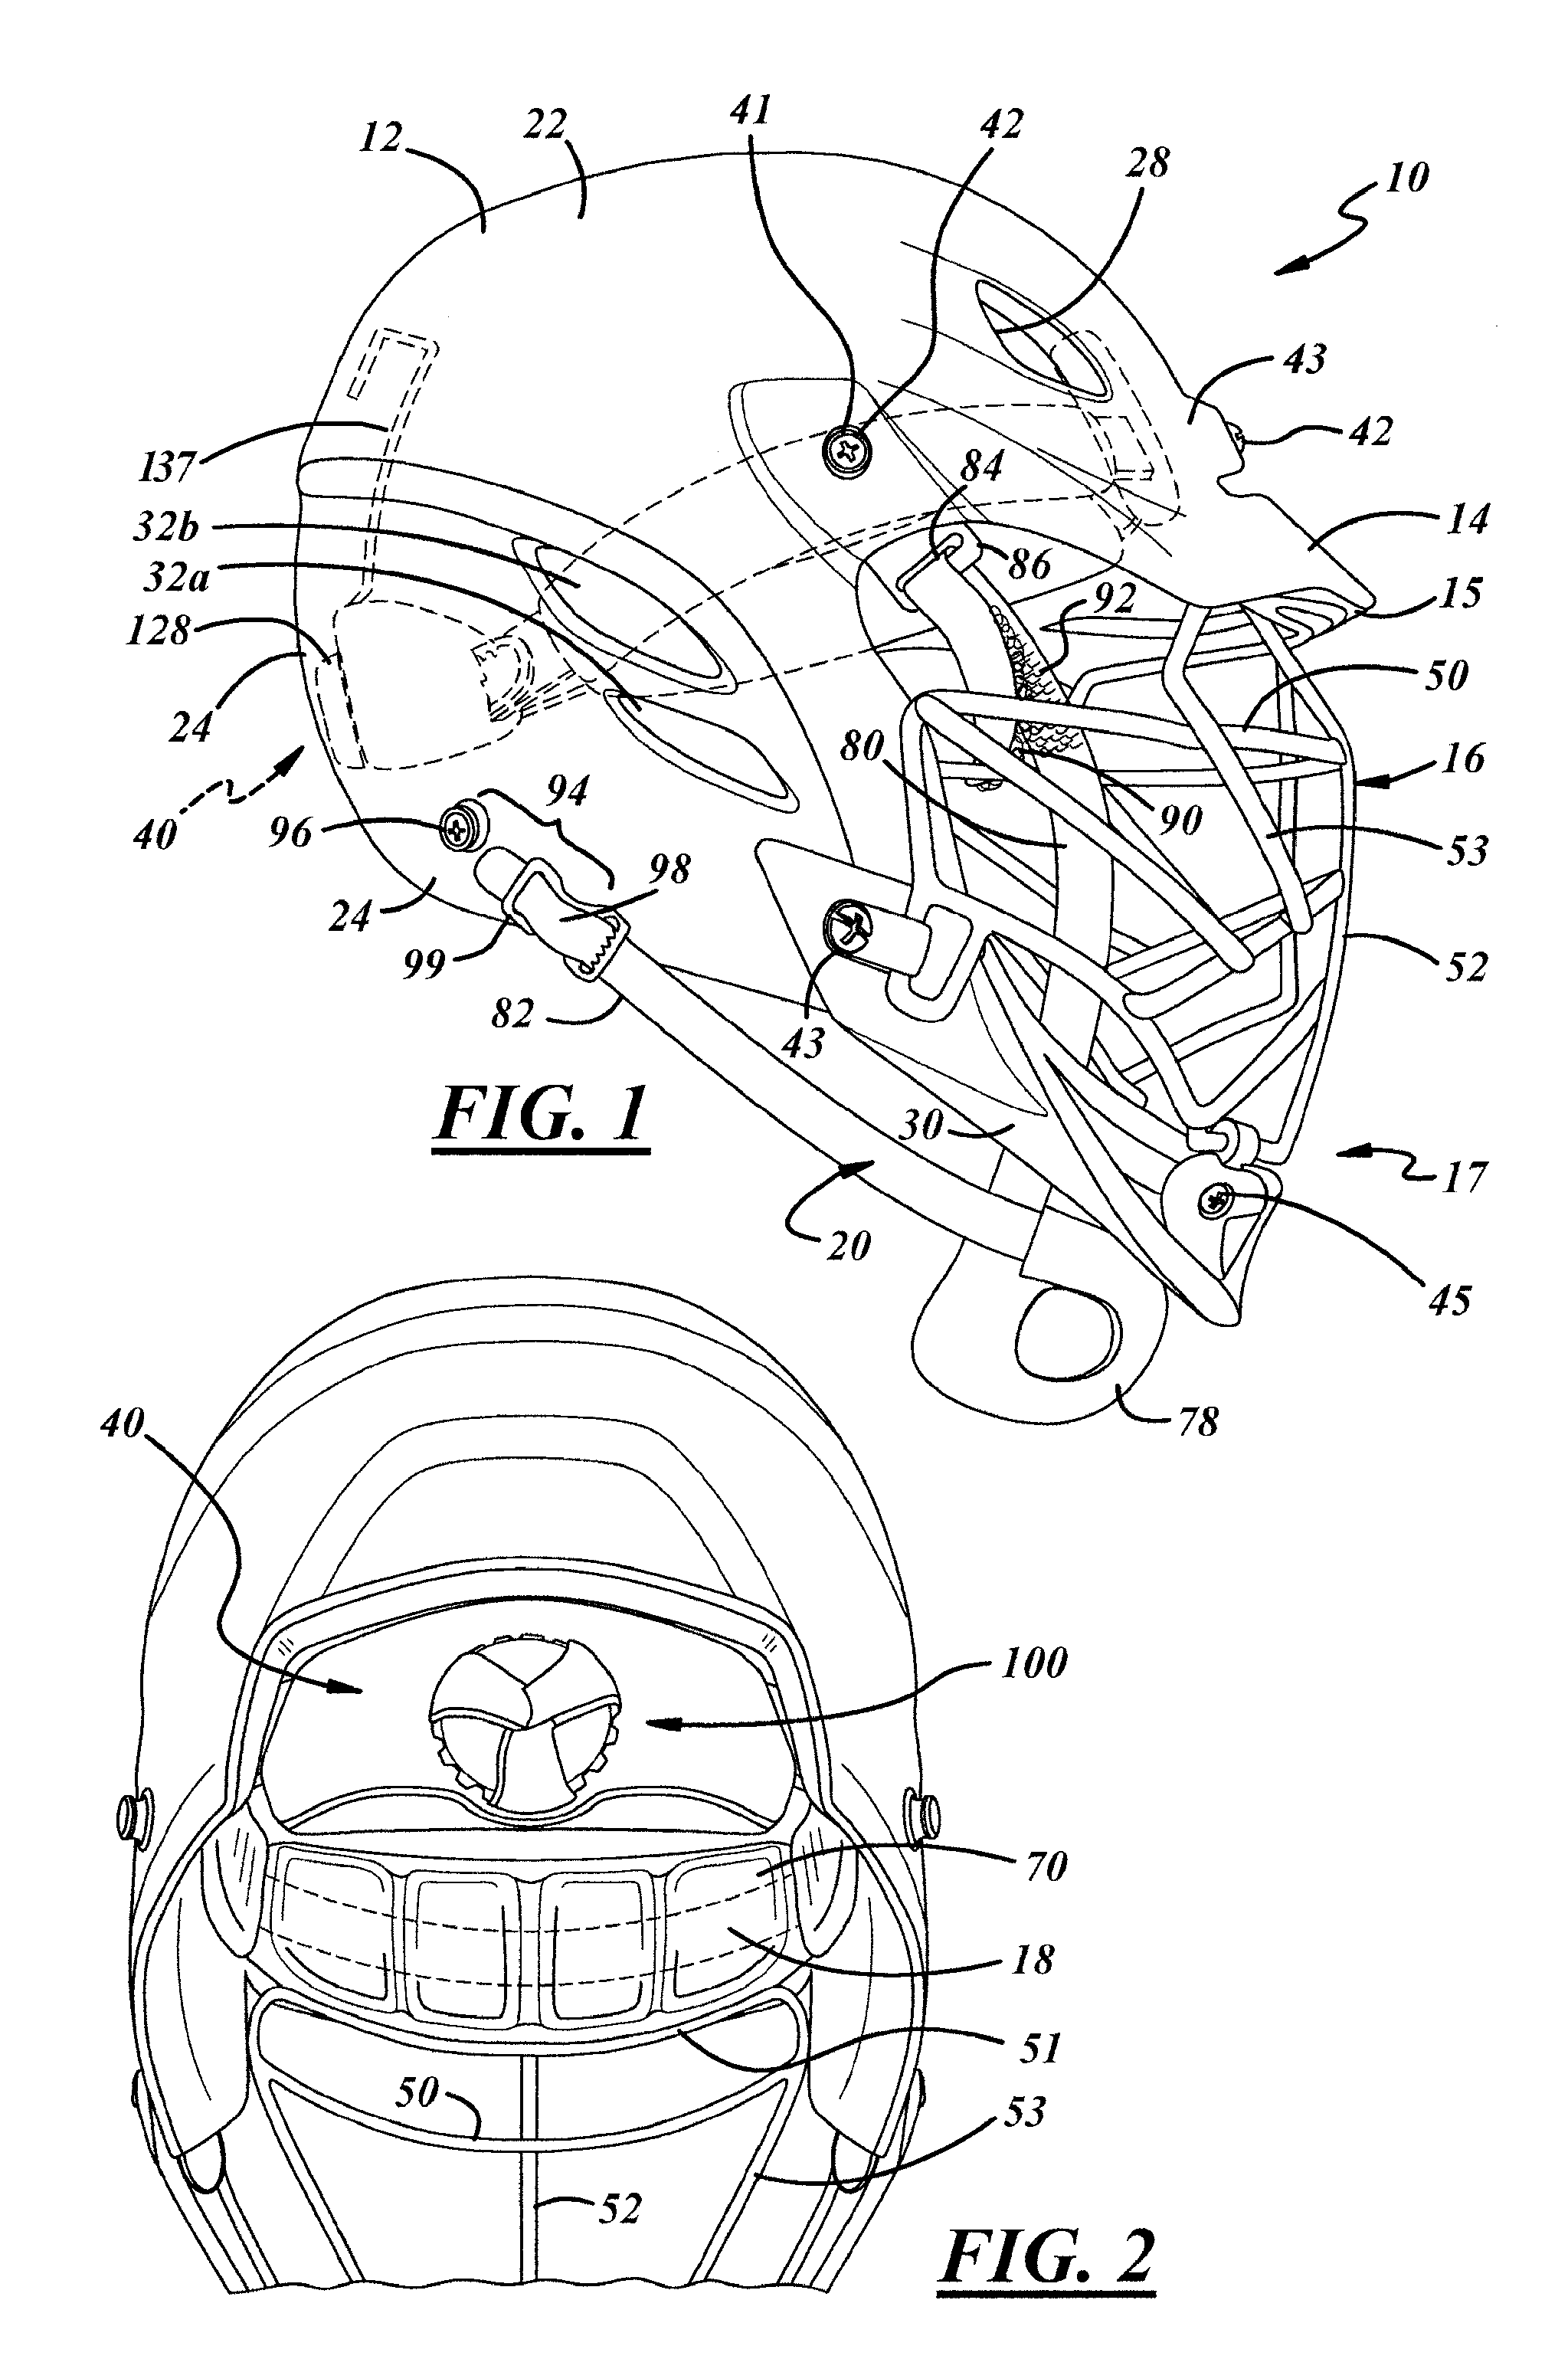 Helmet adjustment system